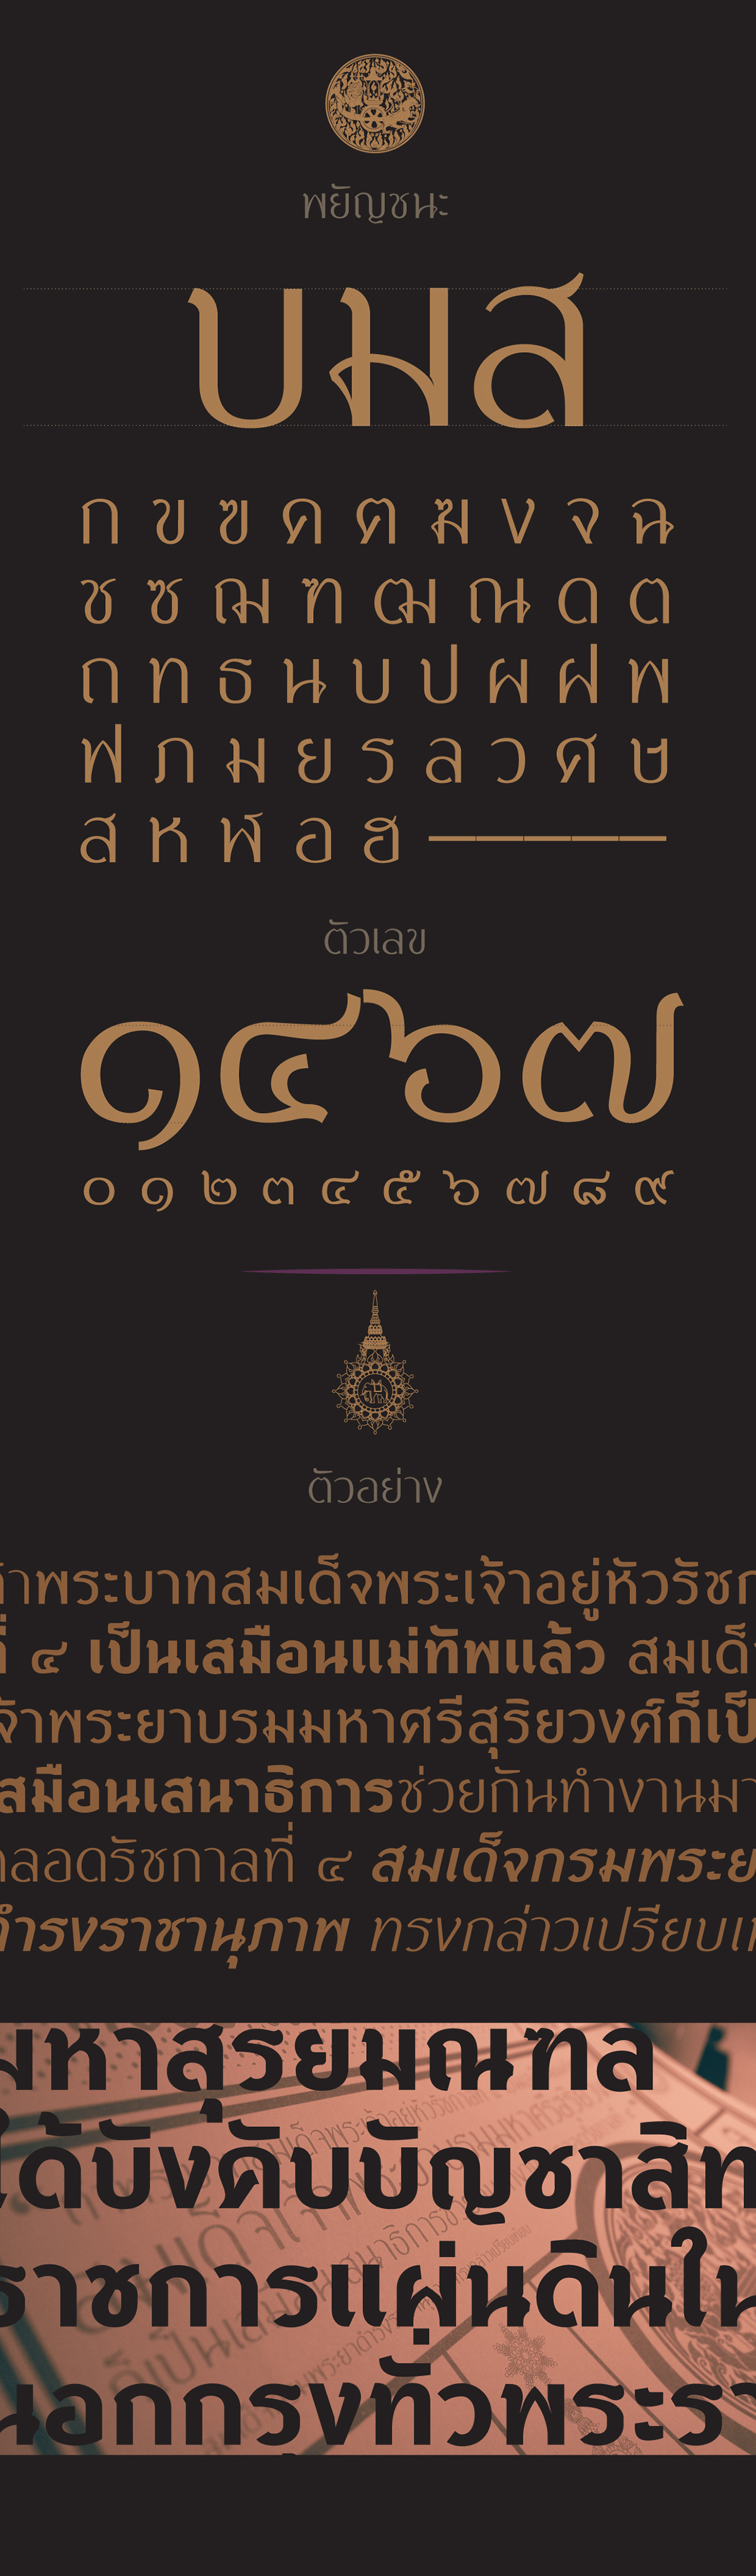 Bansomdejchaopraya Rajabhat University Free font Typeface Thai Font